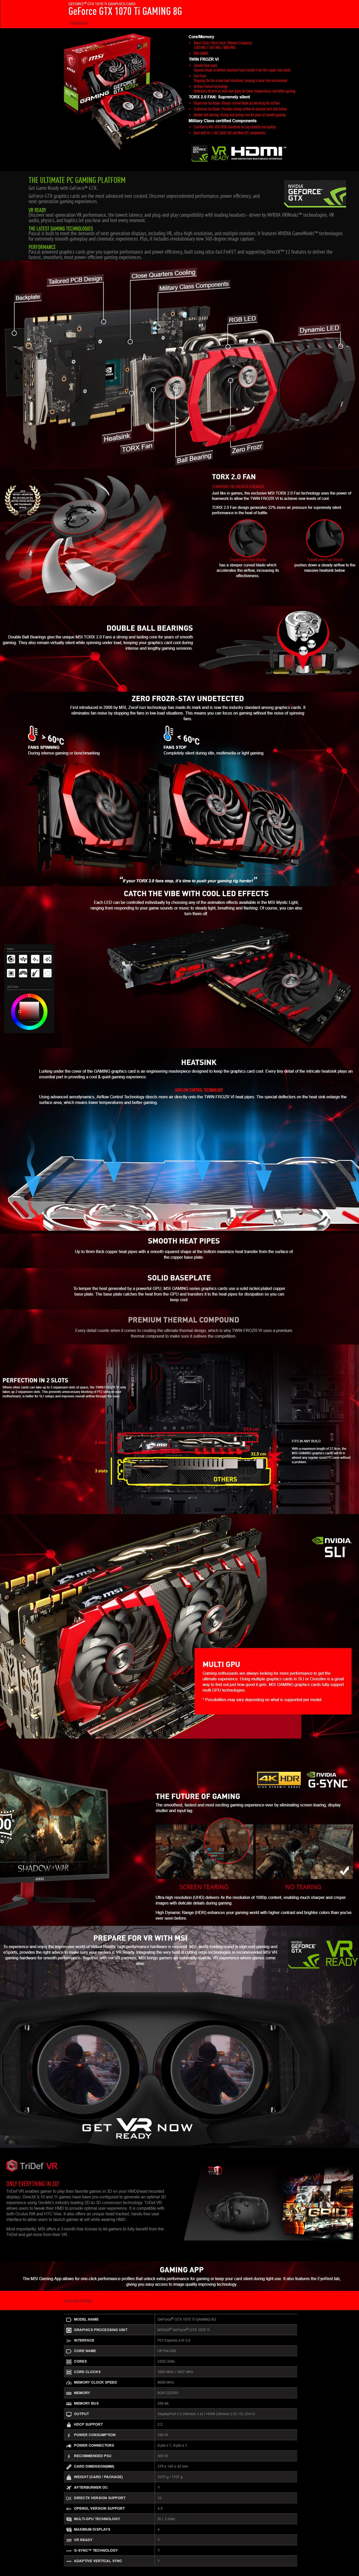 MSI Geforce GTX 1070 Ti GAMING 8G GDDR5 features